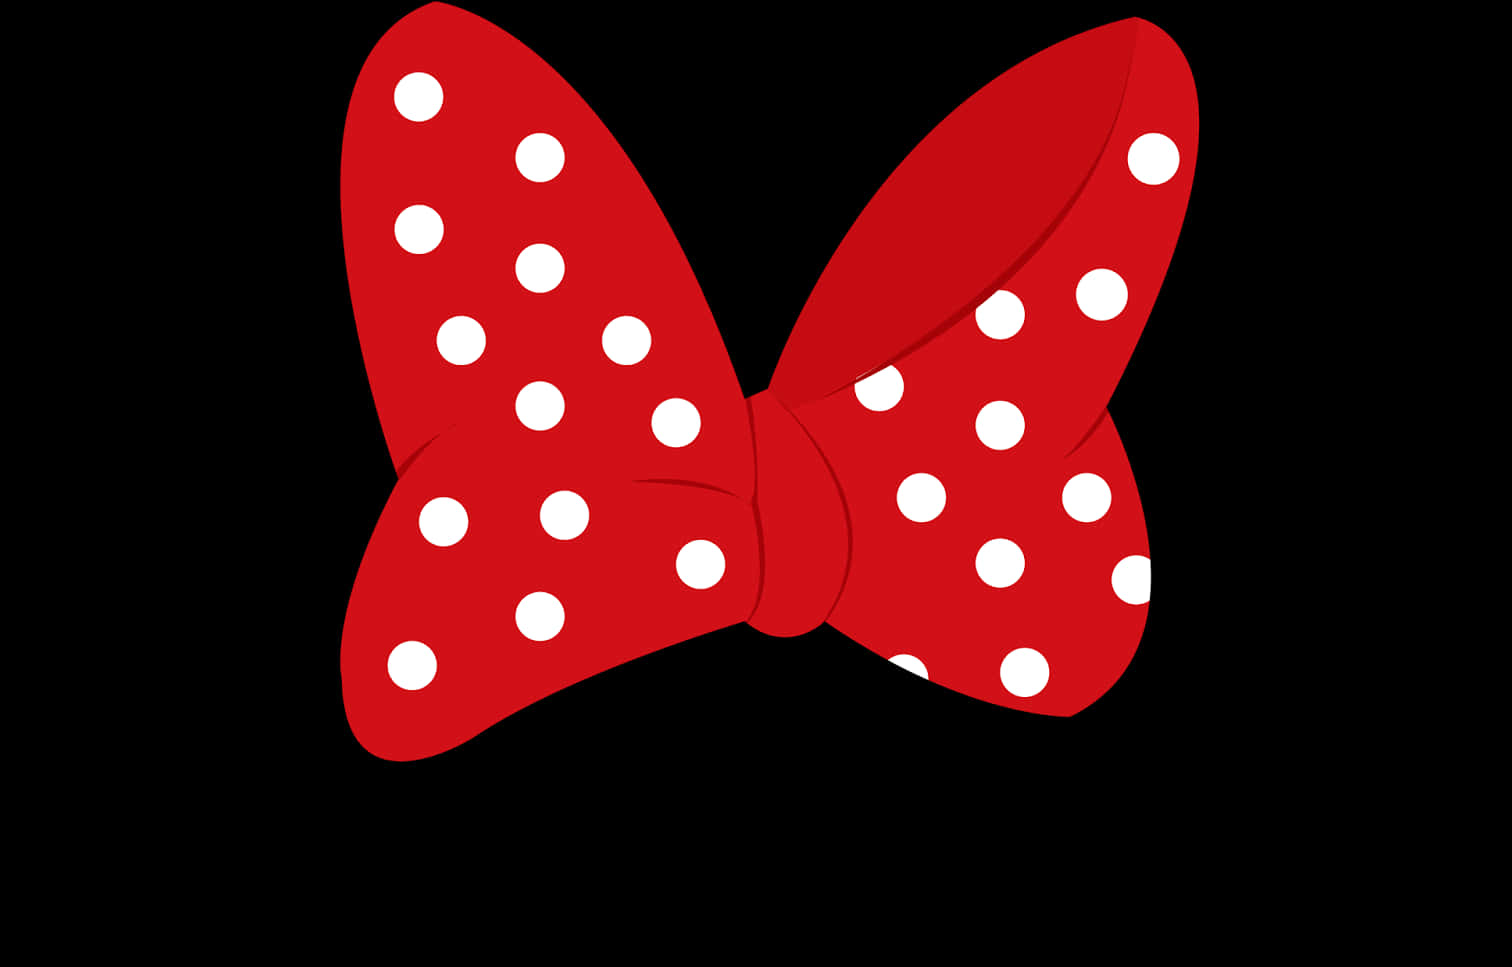 Red Polka Dot Bow Illustration PNG image